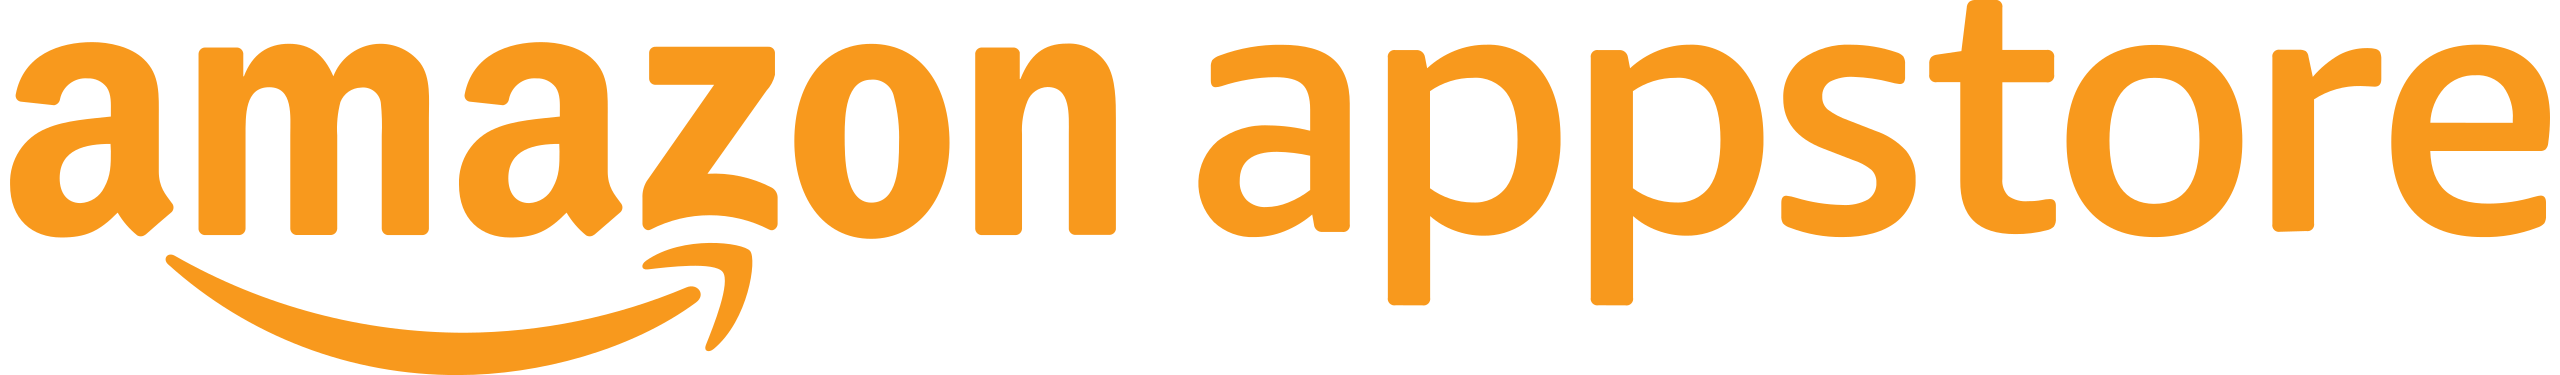 amazon store logo